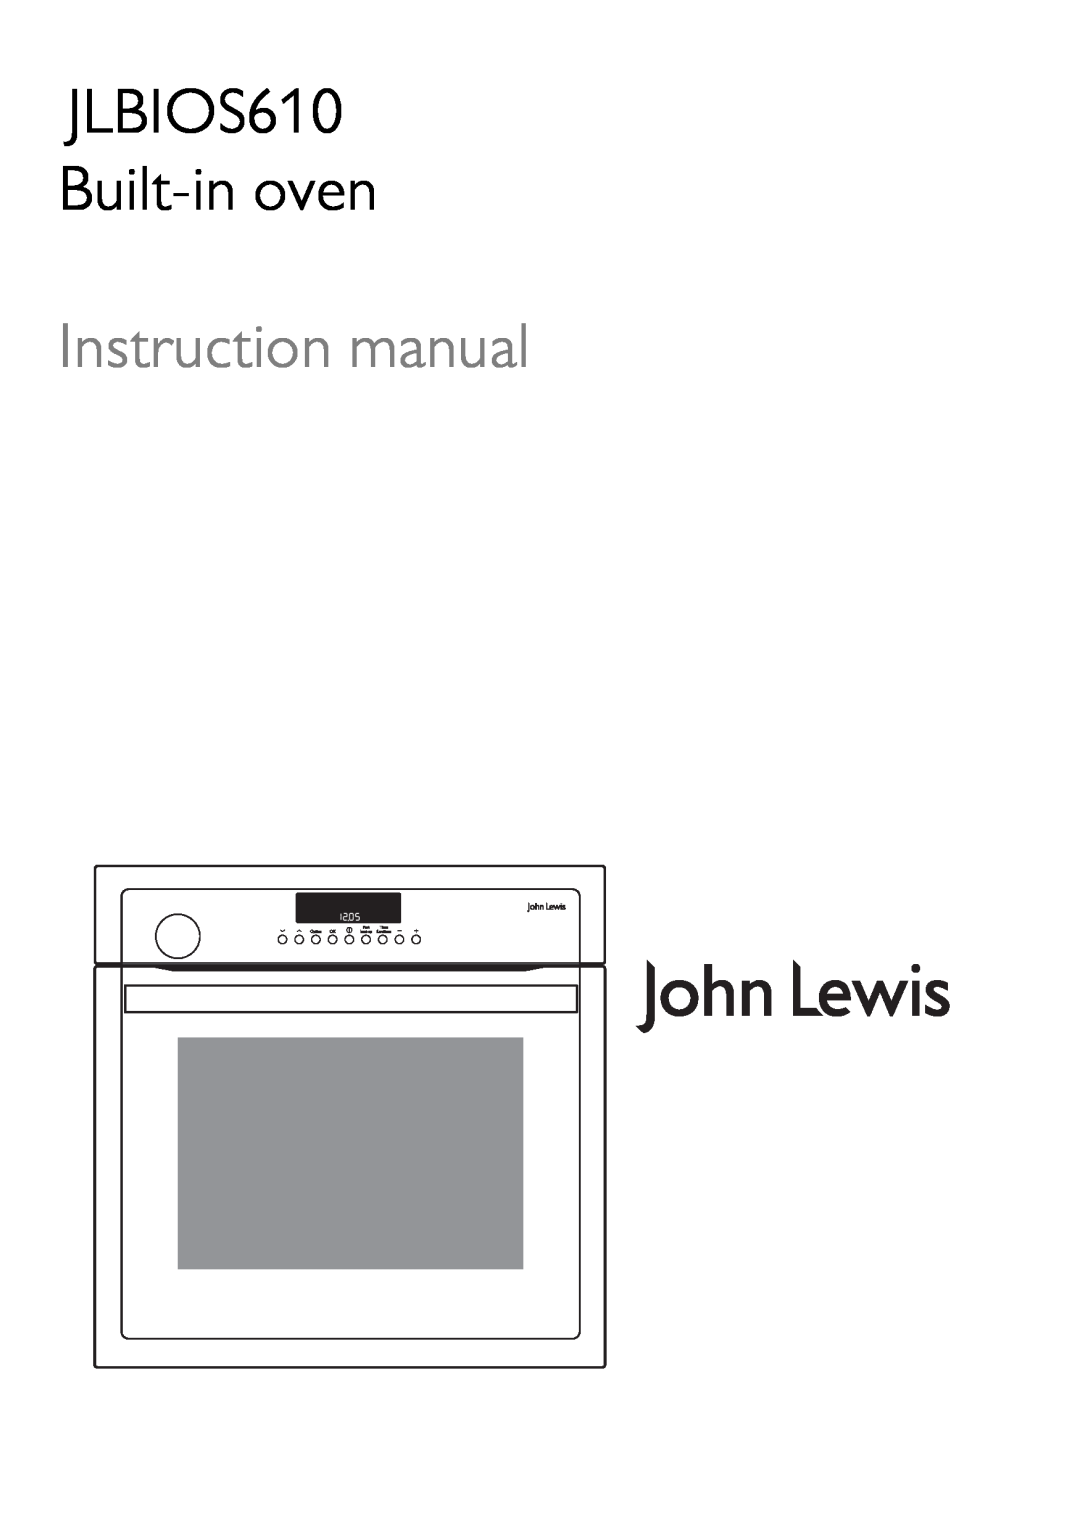 John Lewis instruction manual JLBIOS610 Built-inoven, Instruction manual 